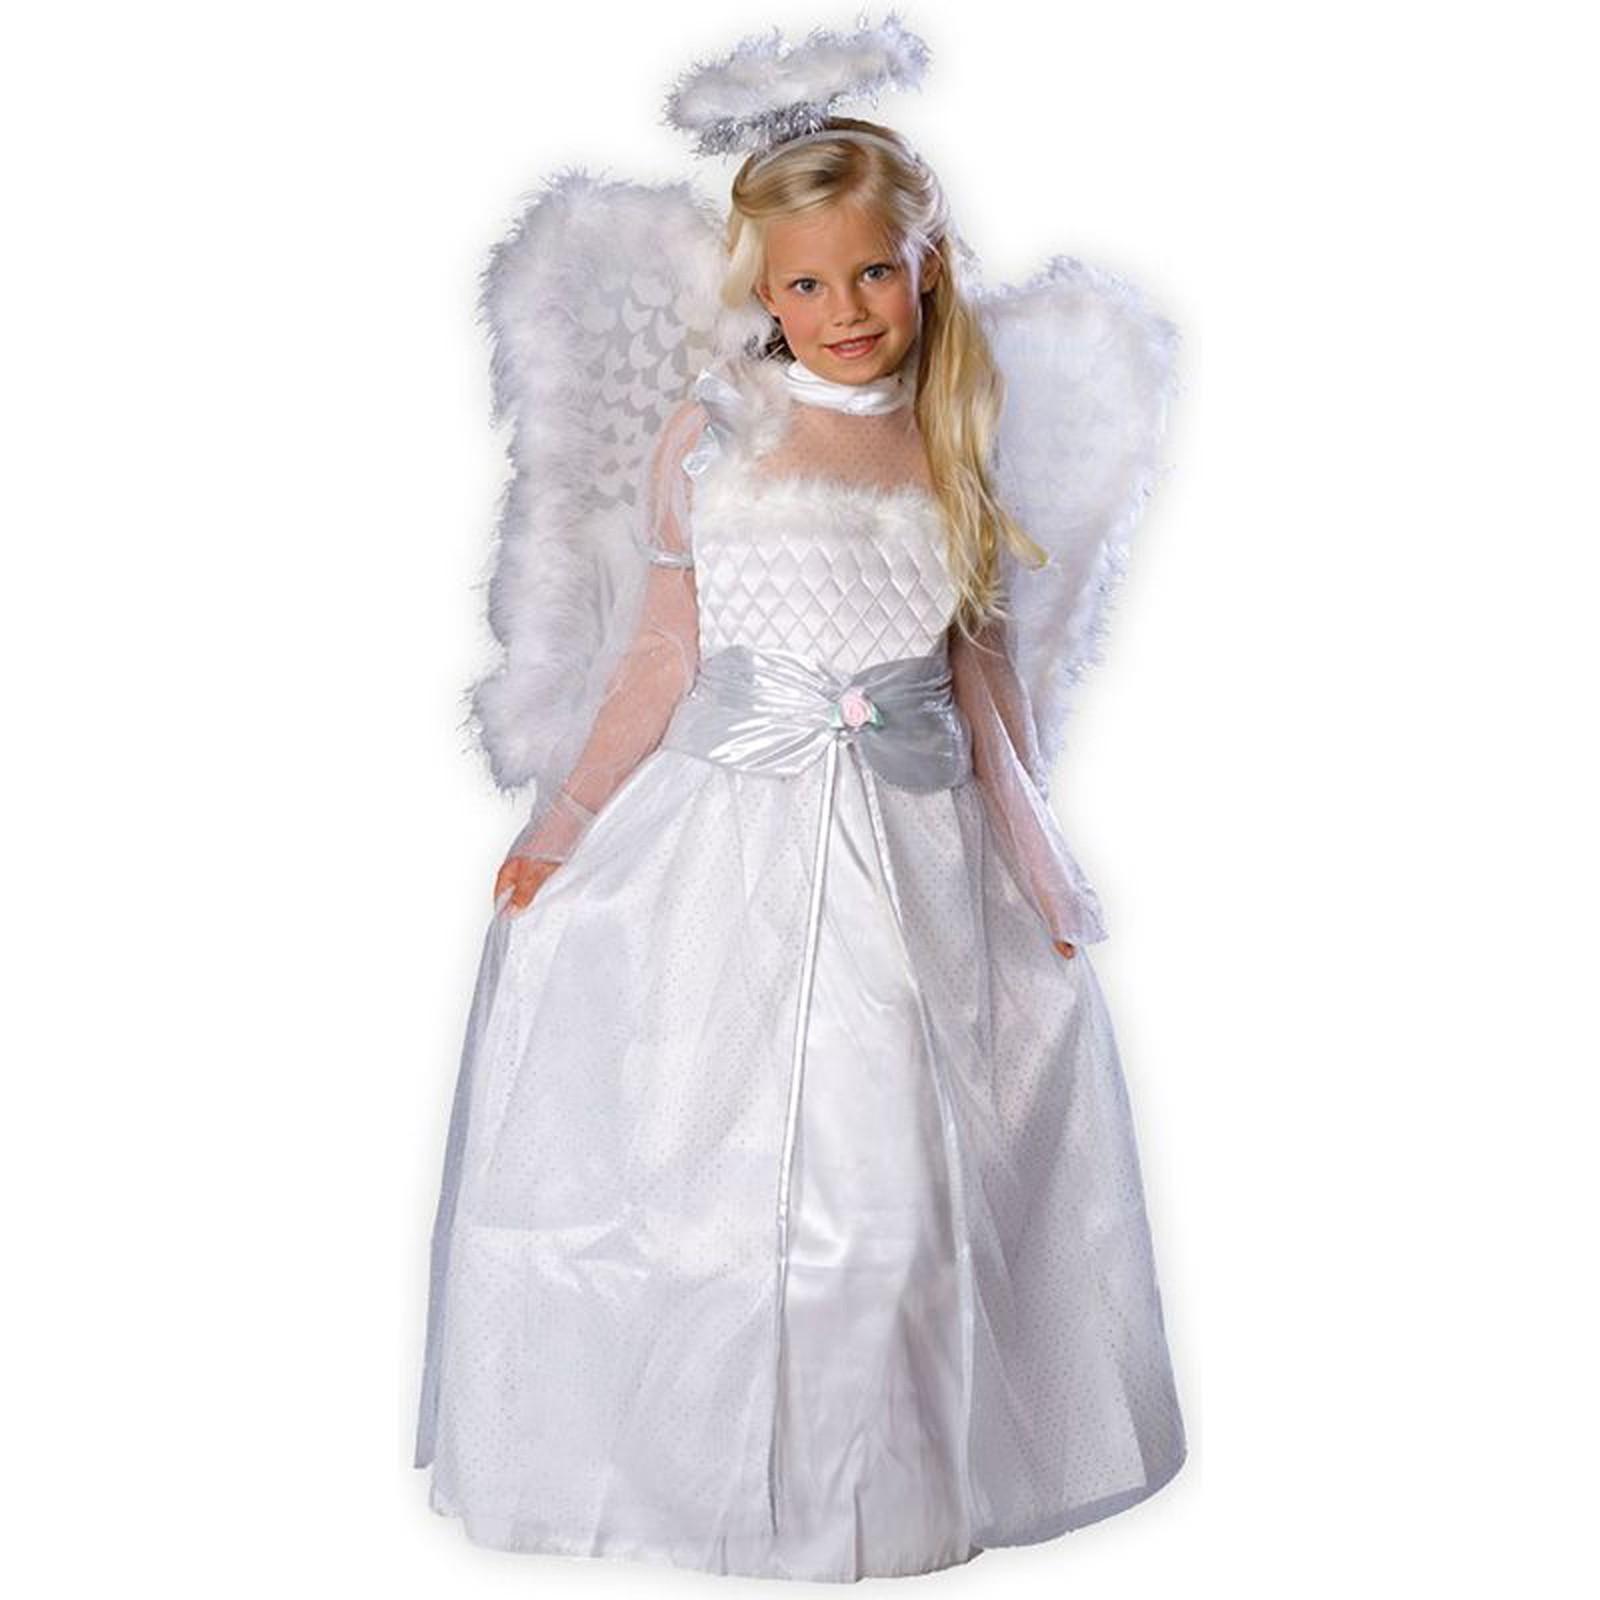 Rosebud Angel Child Costume